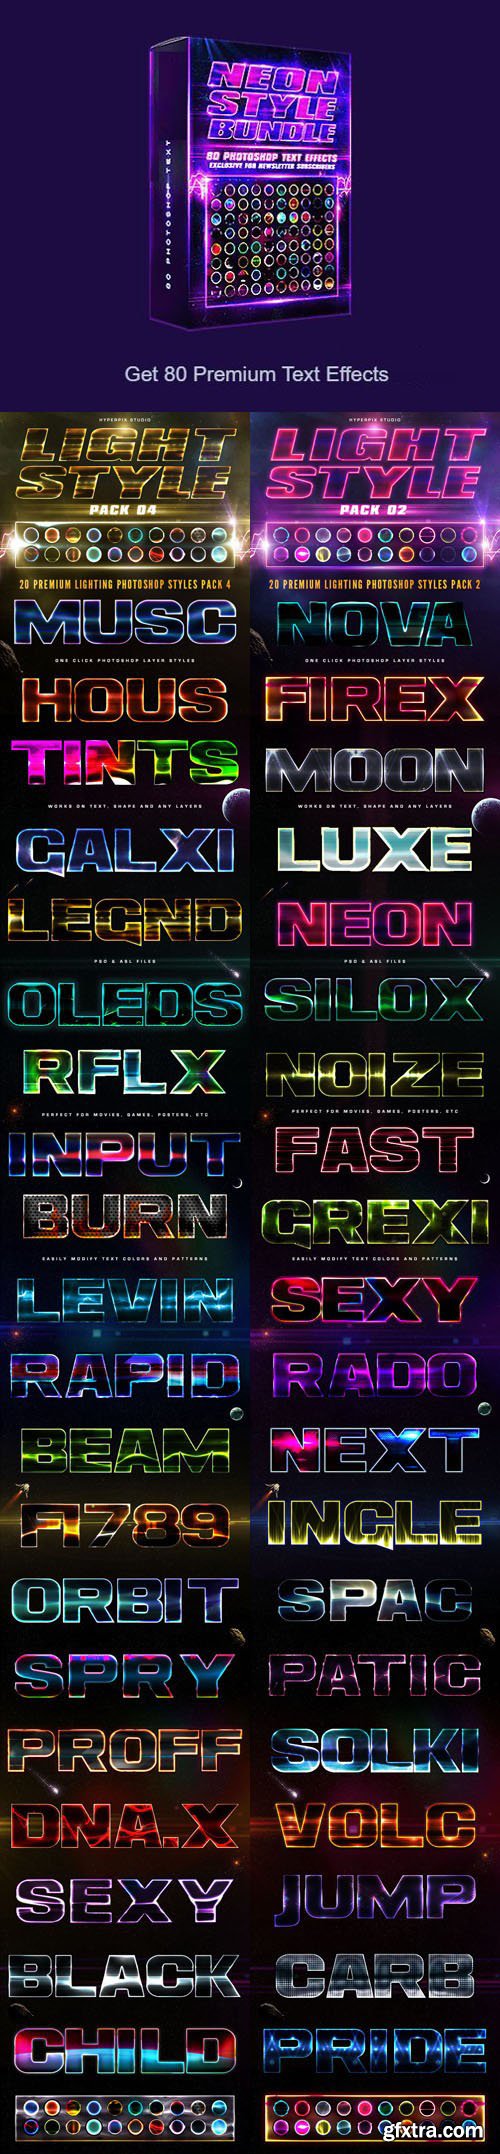 Neon Style Bundle - 80 Premium Text Effects for Photoshop